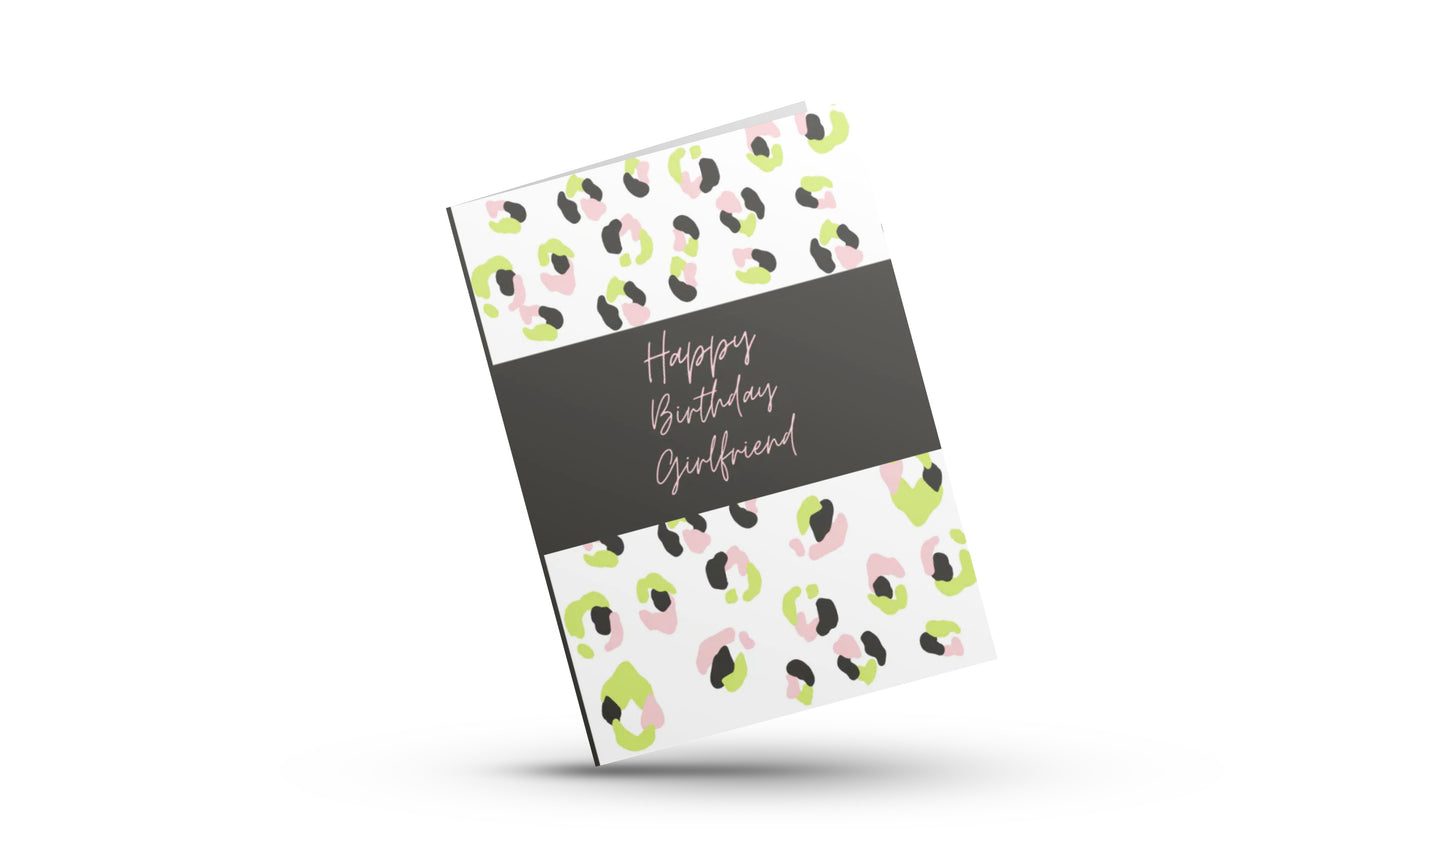 Hey Girl  -  Gift Box Greeting Card Set of 10